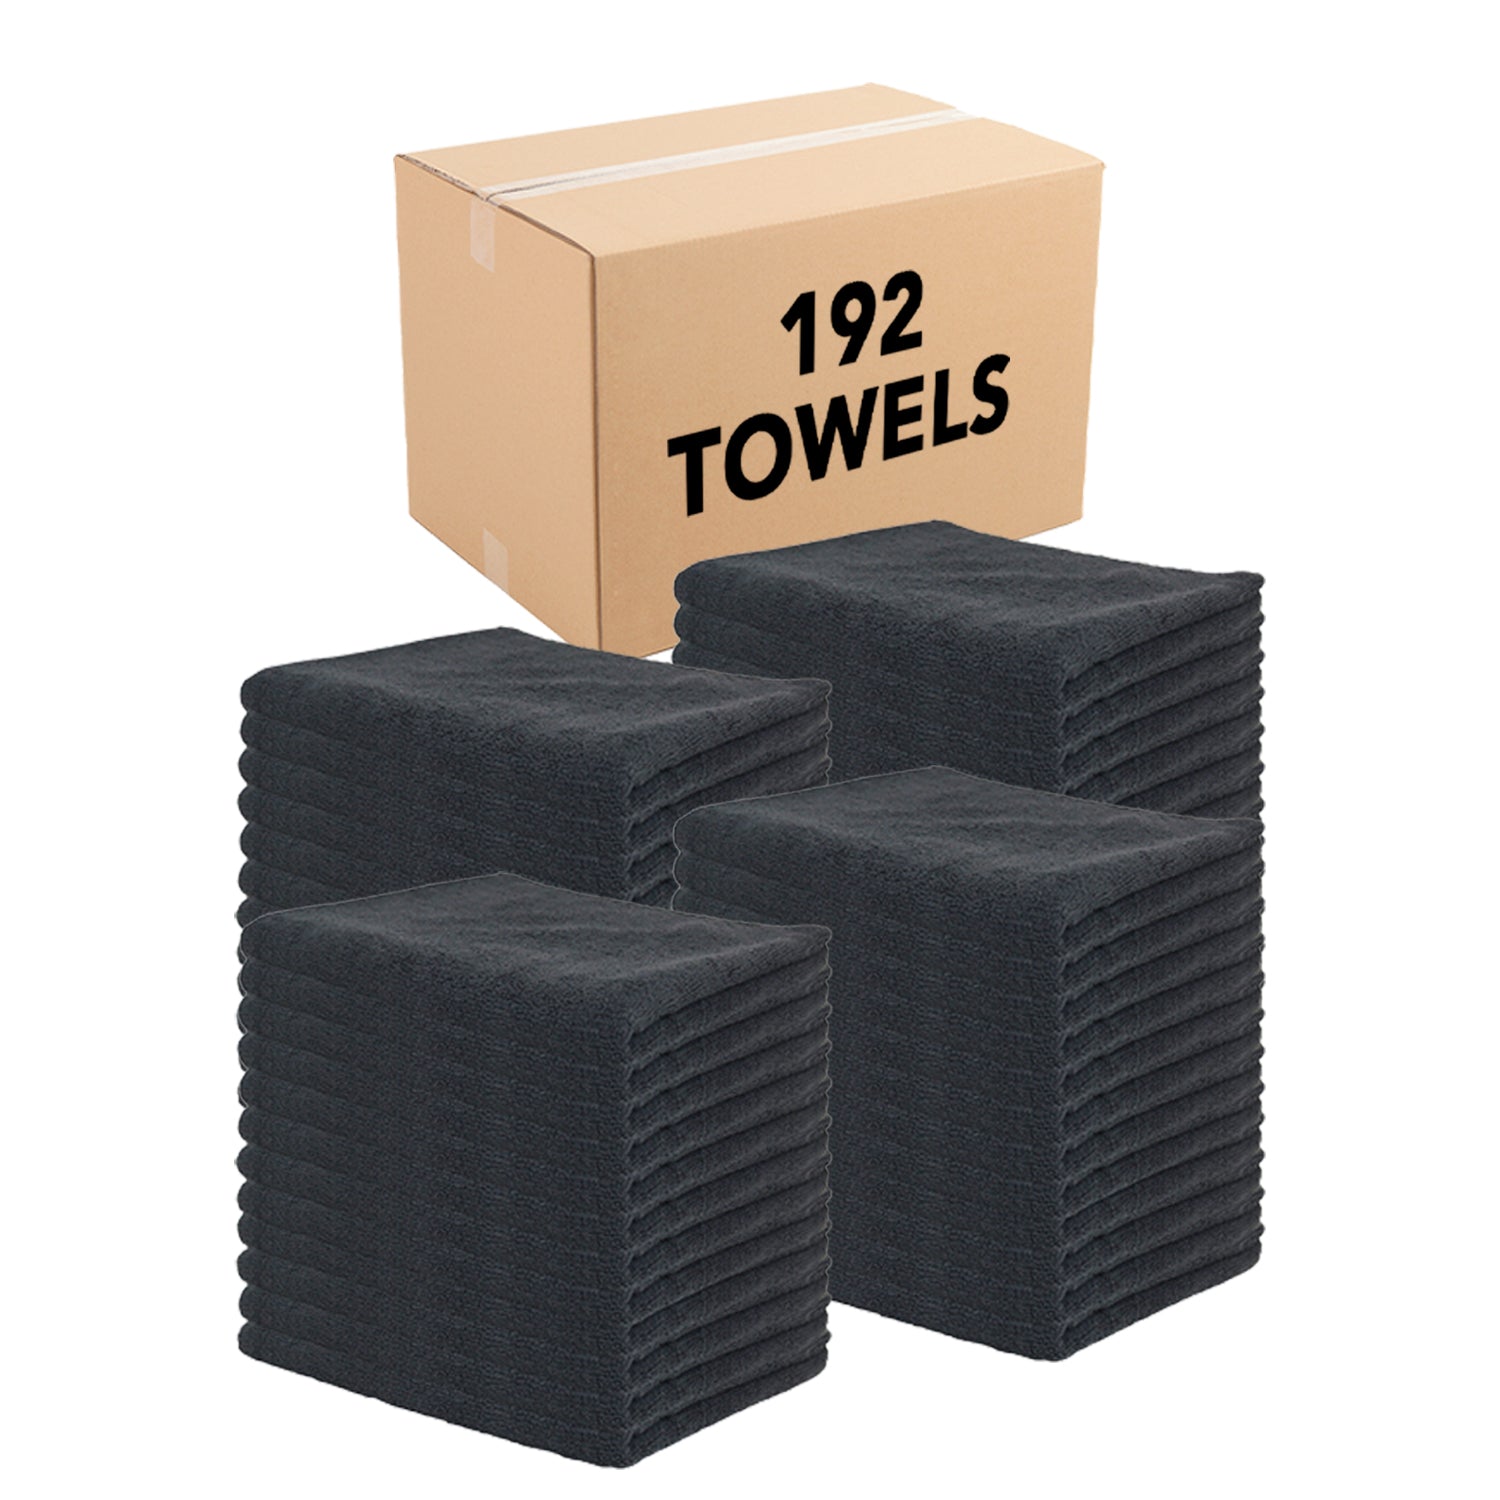 Wholesale Microfiber Towels, Black Microfiber Towel